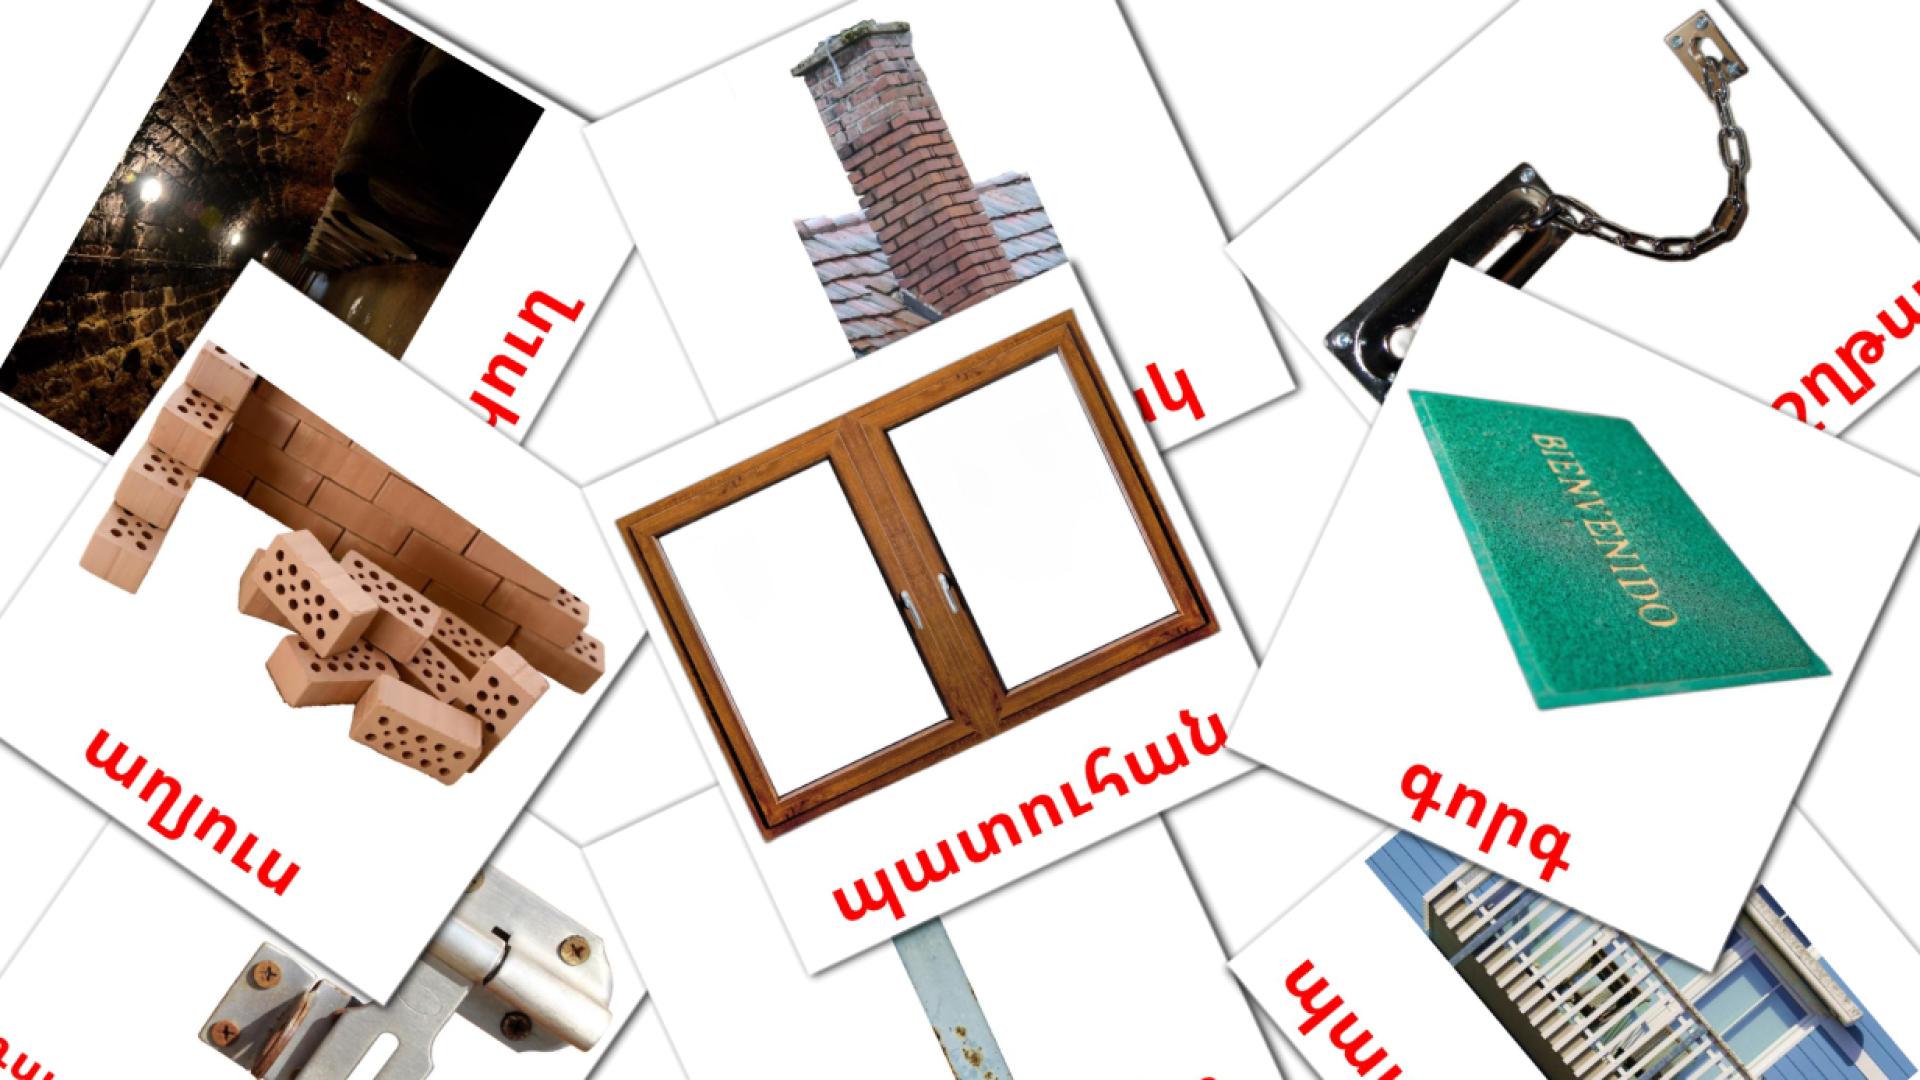 House - armenian vocabulary cards